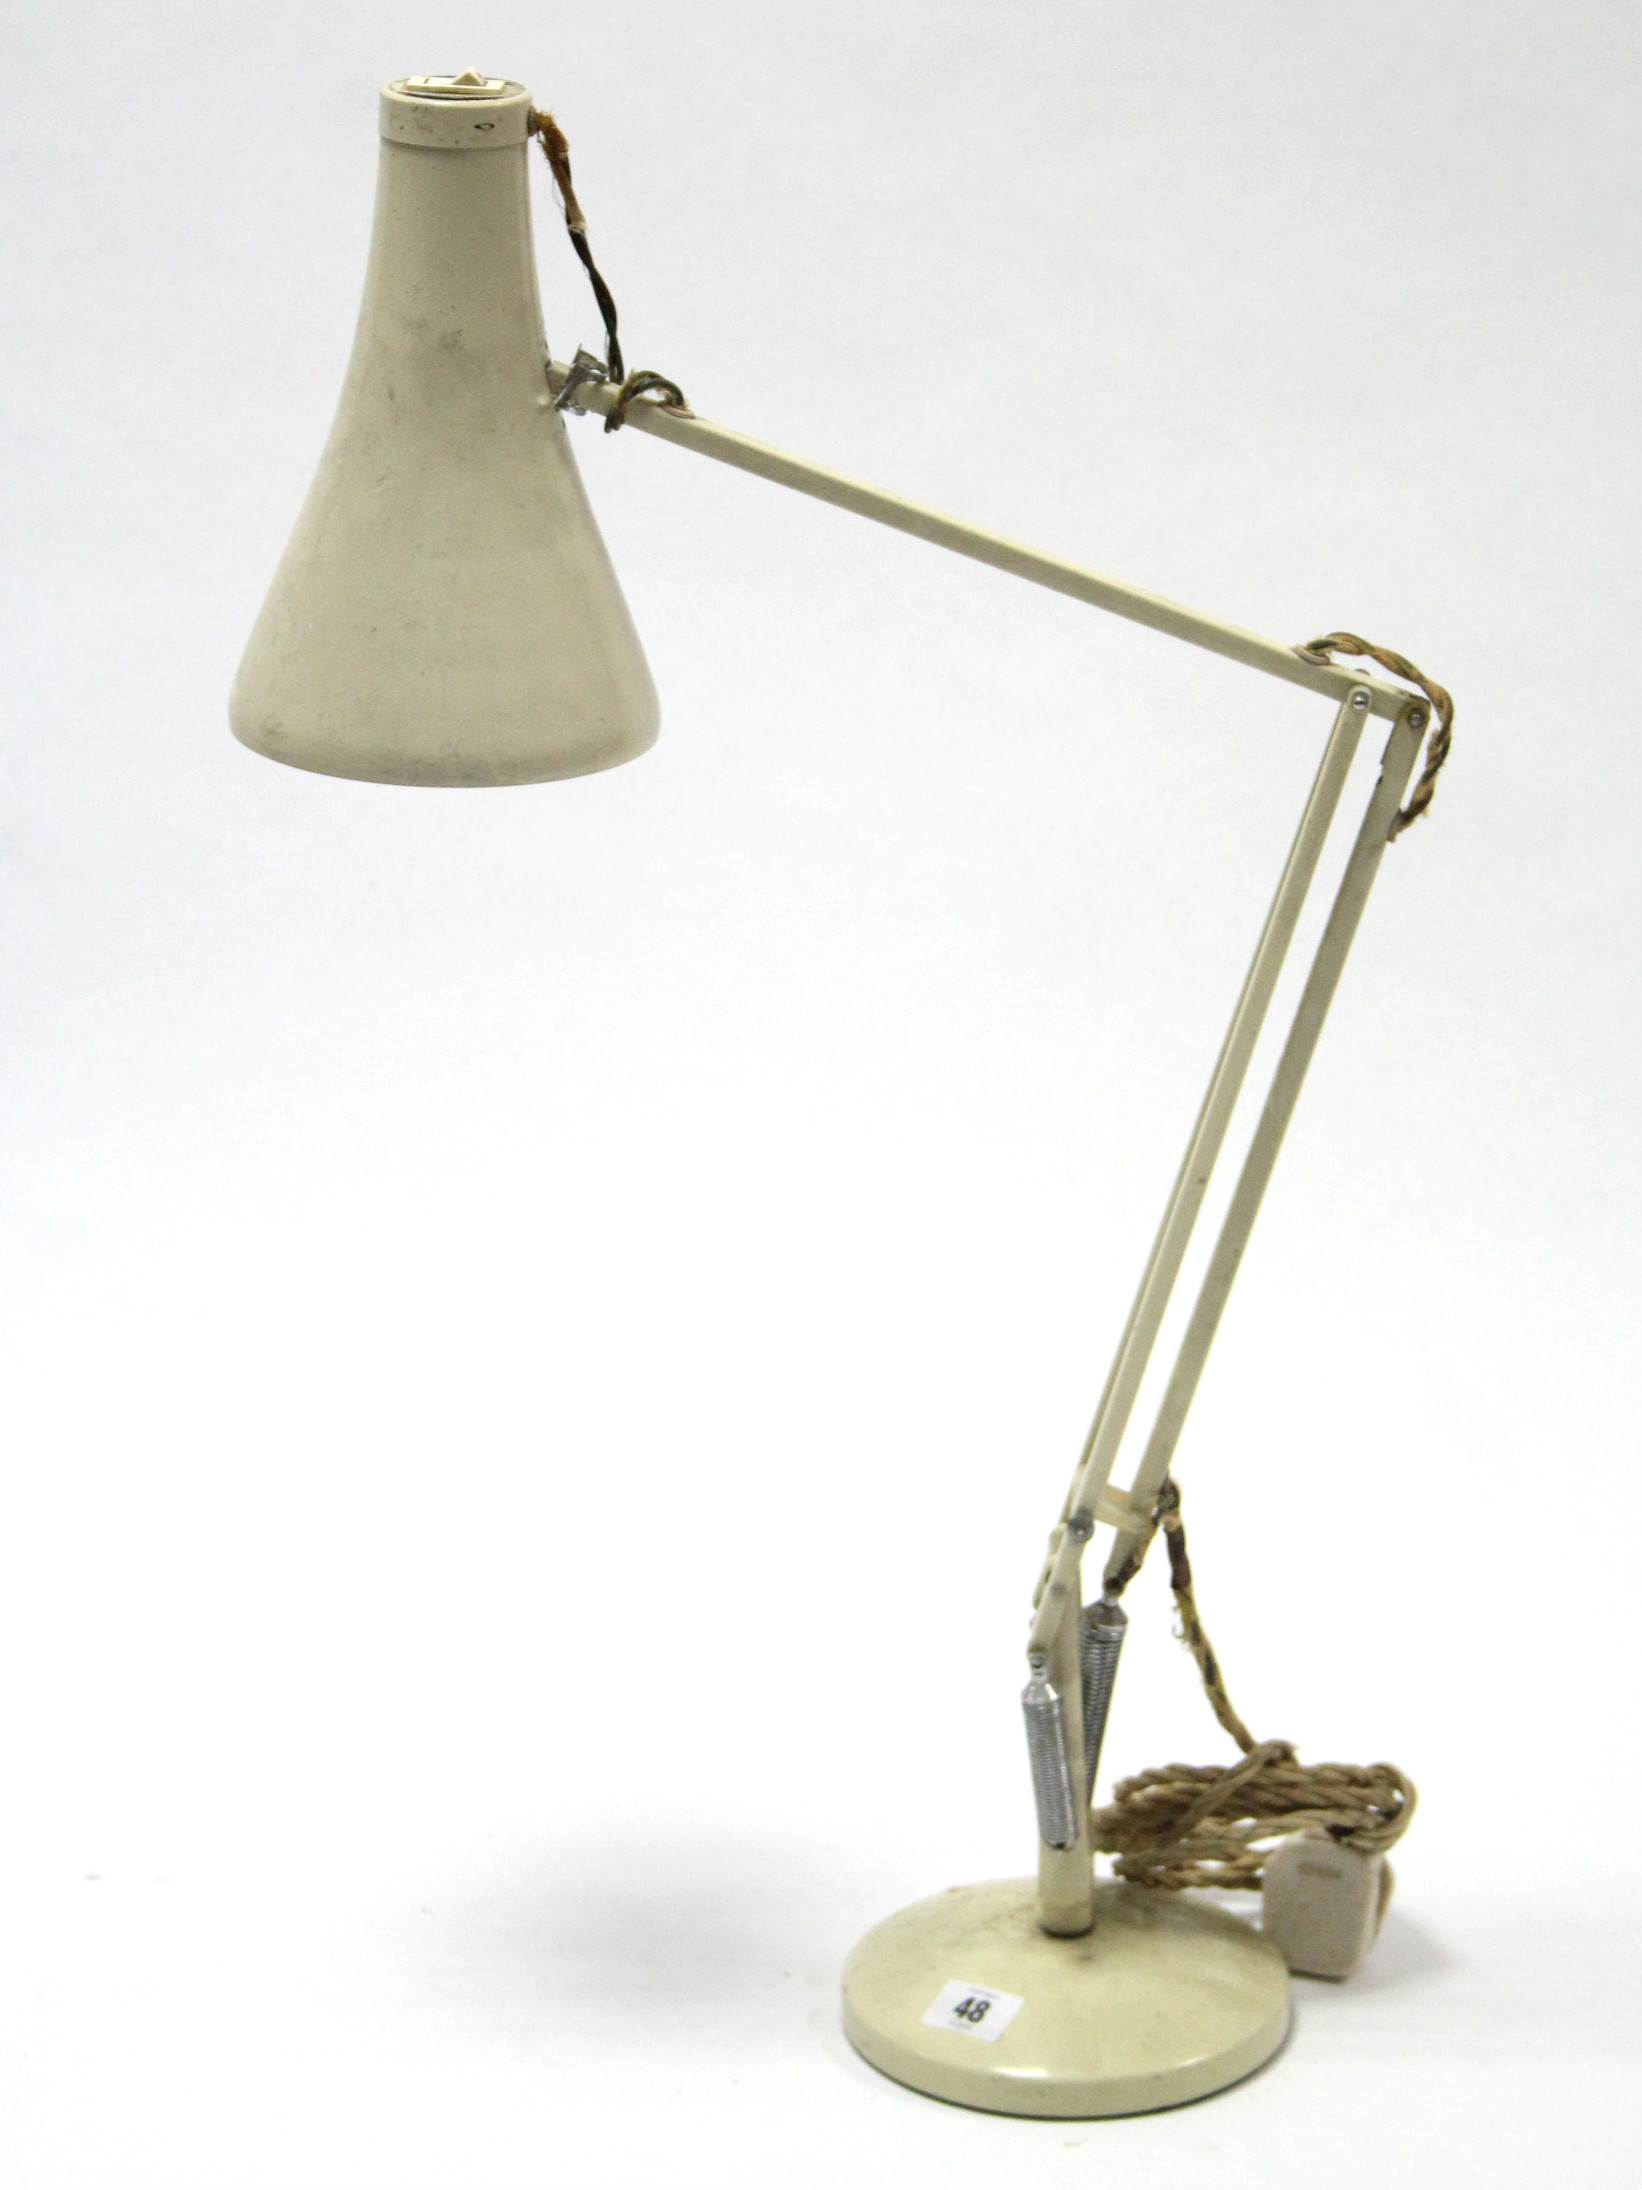 A Herbert Terry of Redditch cream anglepoise desk lamp.